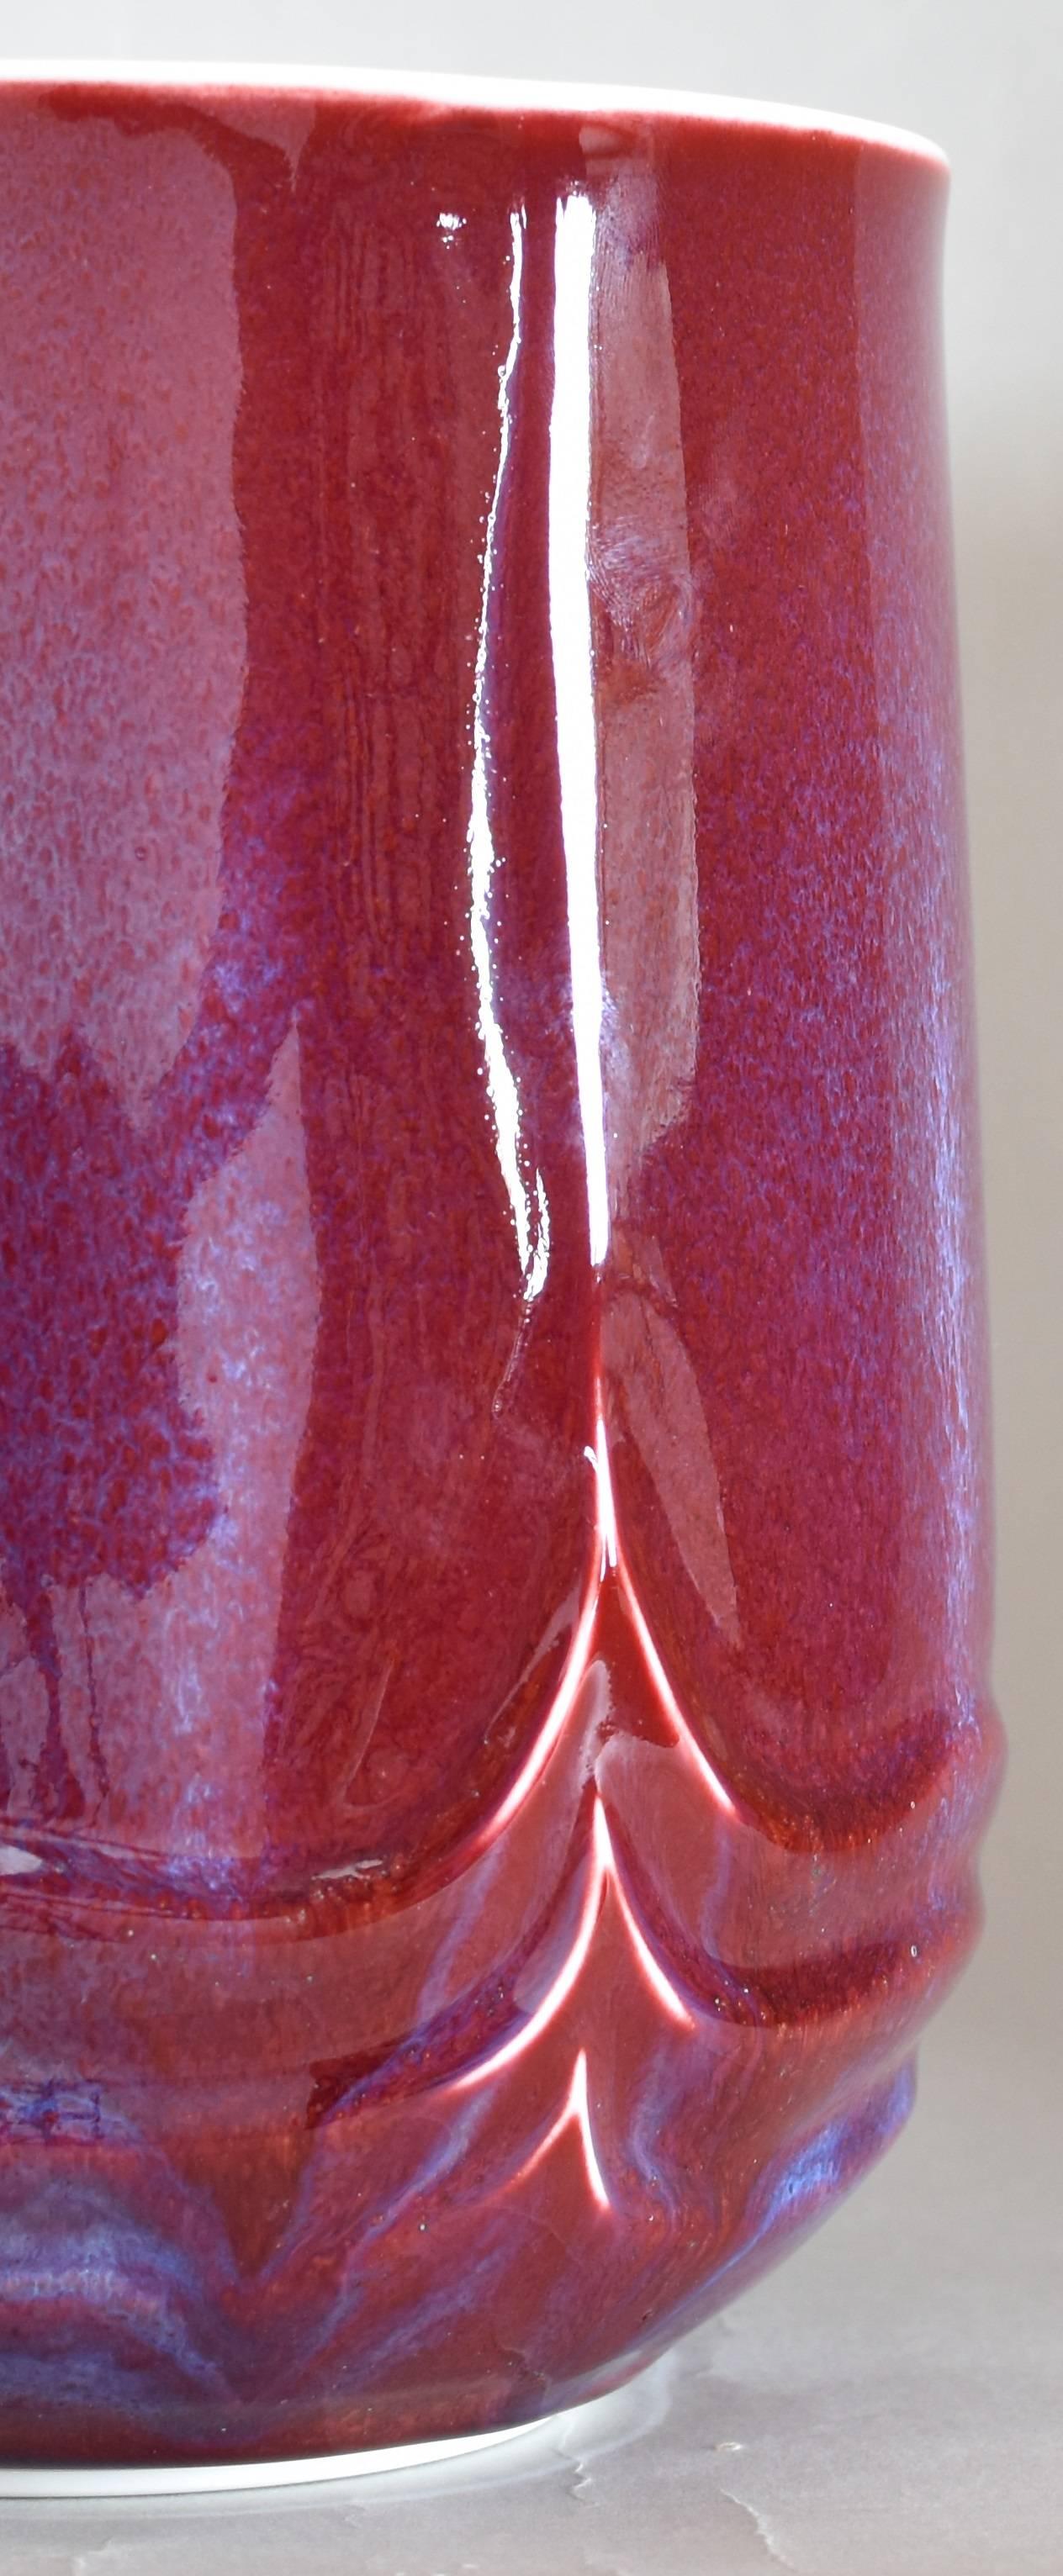  Decorative Glazed Red Decorative Porcelain Vase by Japanese Master Artist 1